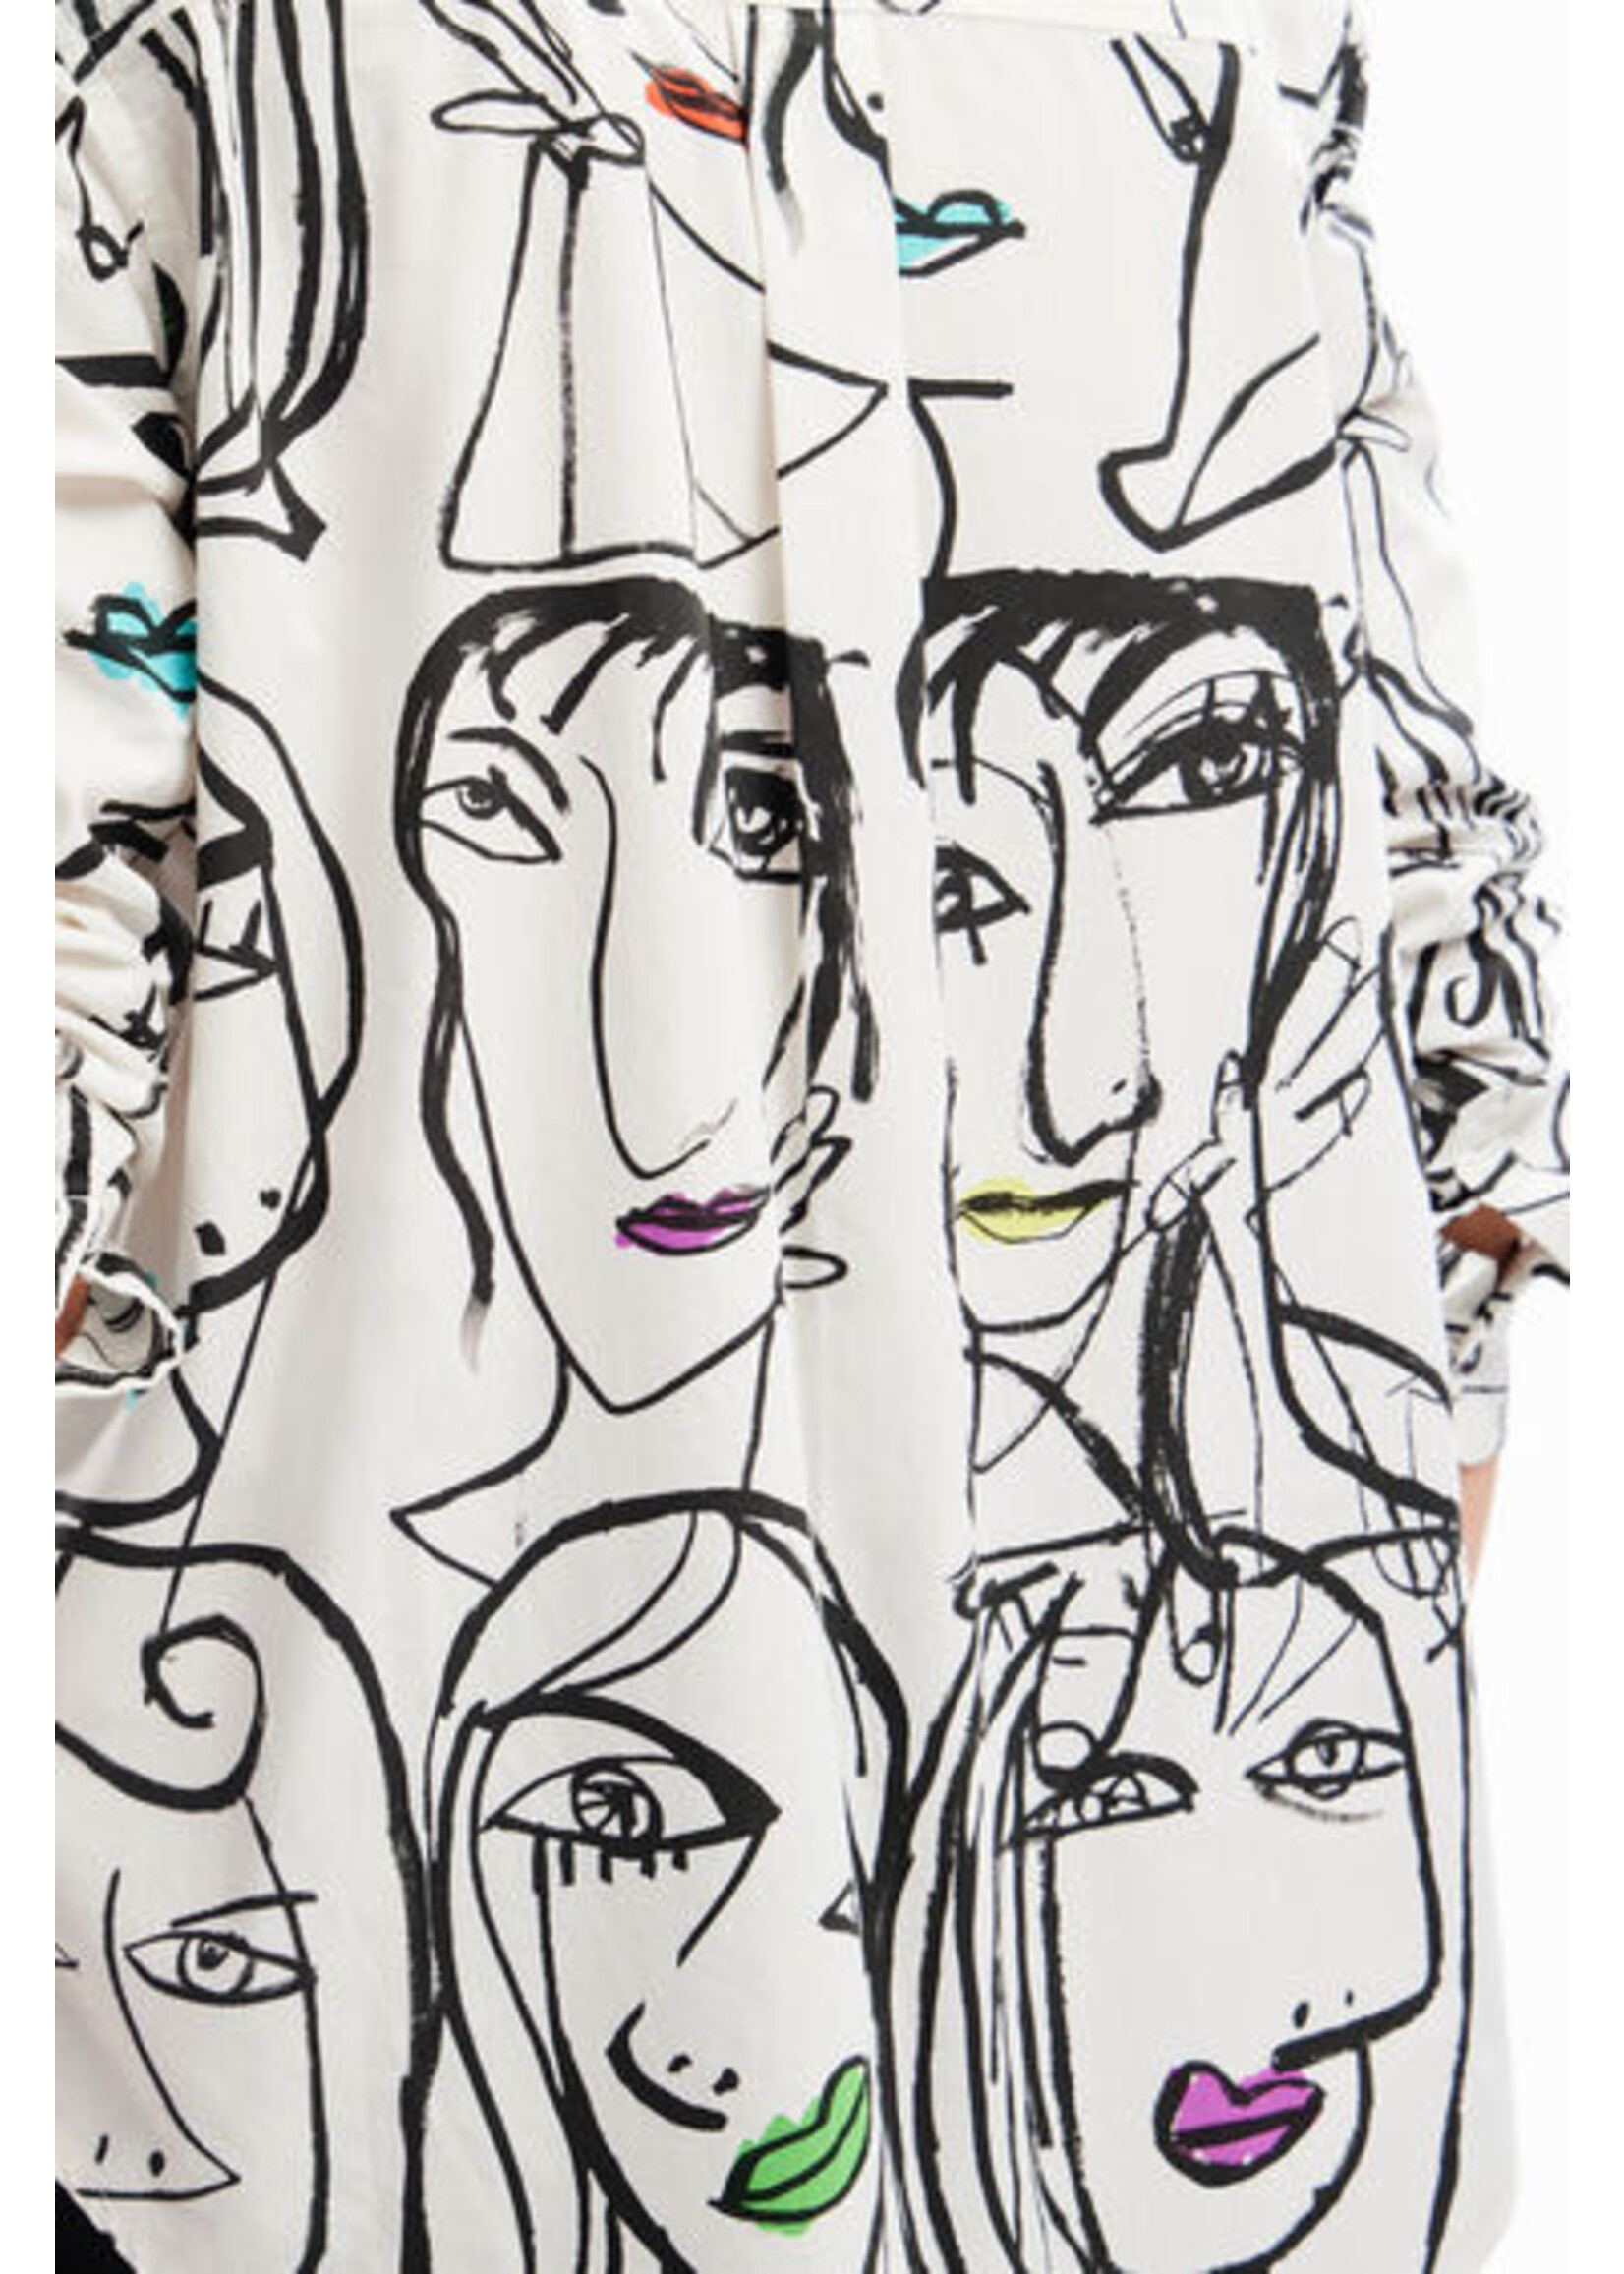 DESIGUAL Women's arty faces shirt